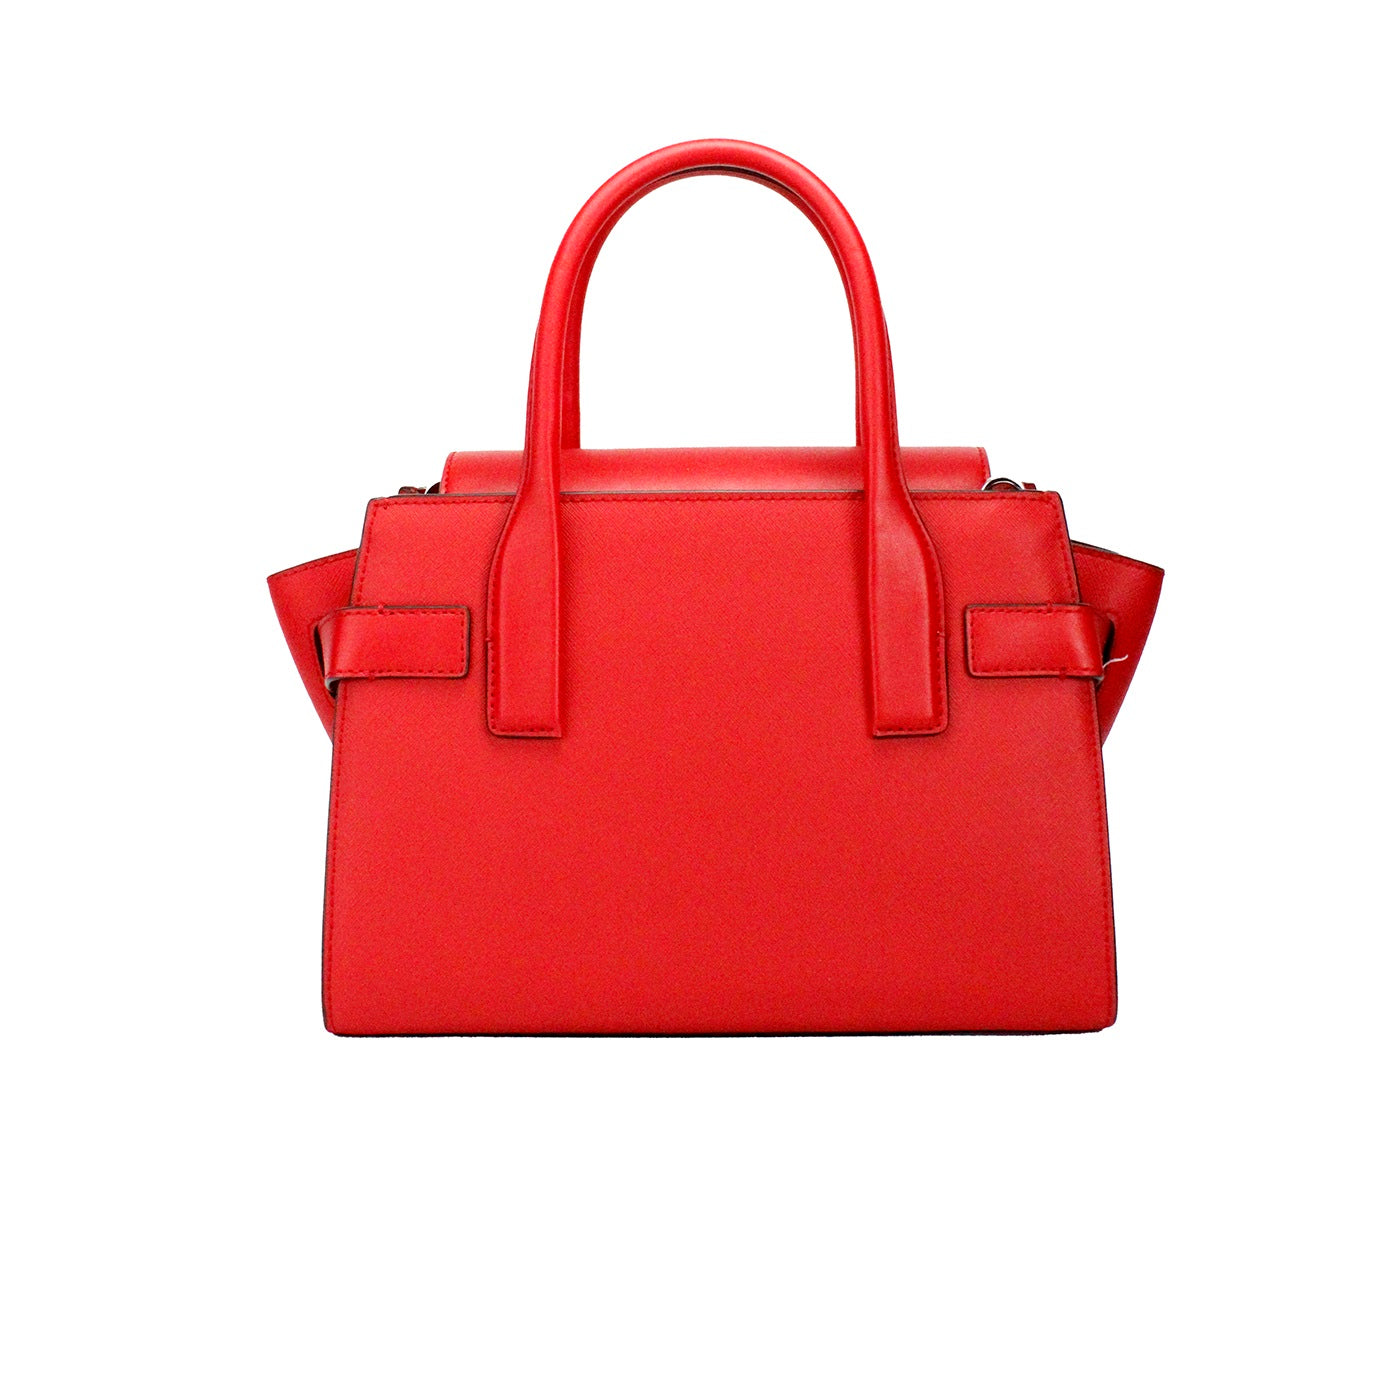 Fashionsarah.com Fashionsarah.com Michael Kors Carmen Medium Bright Red Leather Satchel Bag Purse